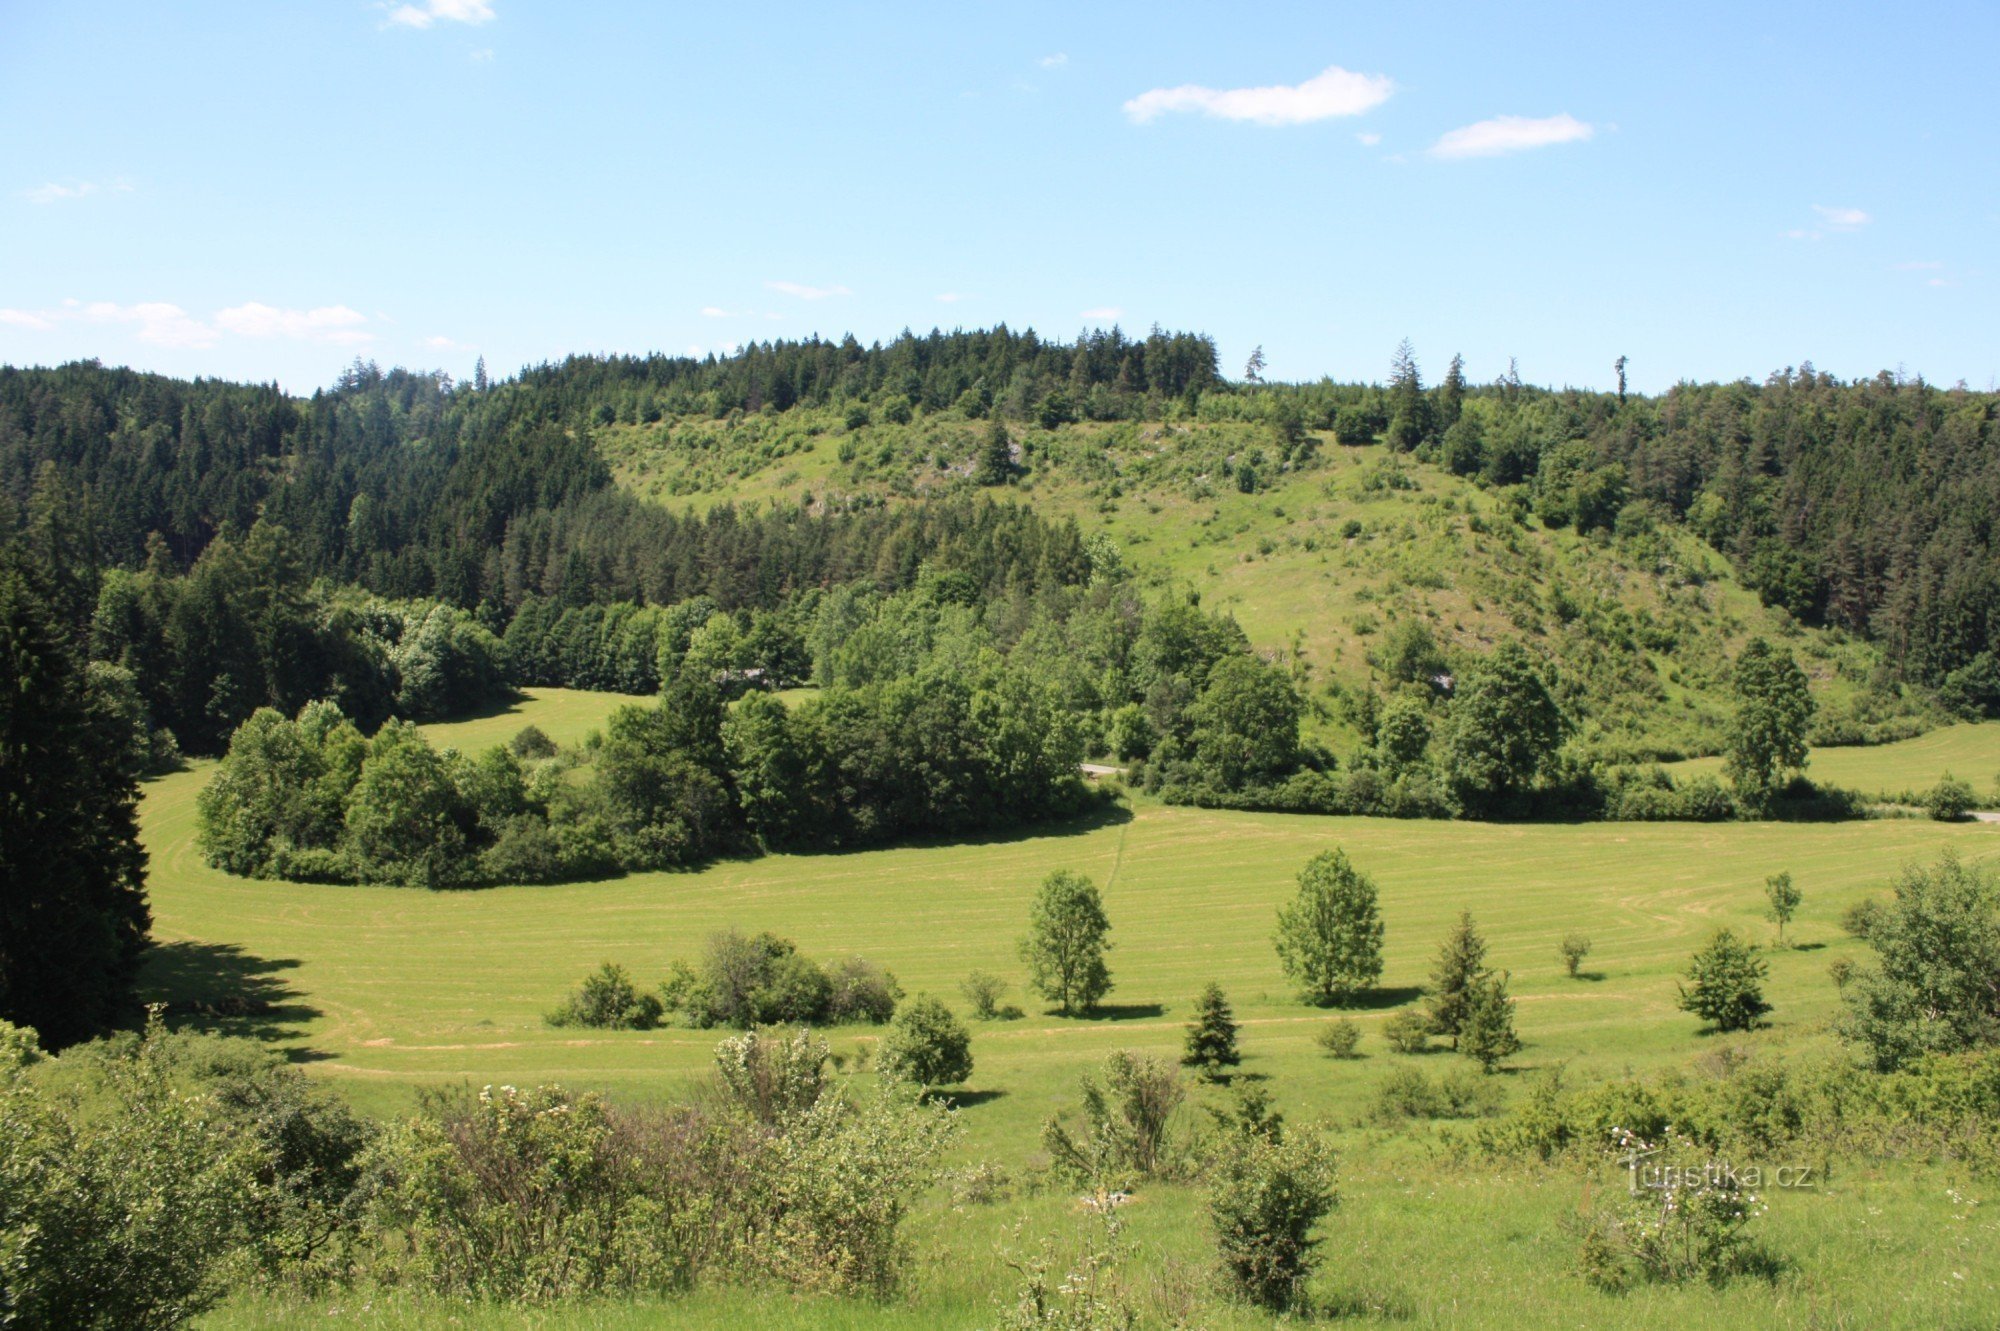 Macošská straň は、Vilémovice ベンドの上にある岩の多い草原です。